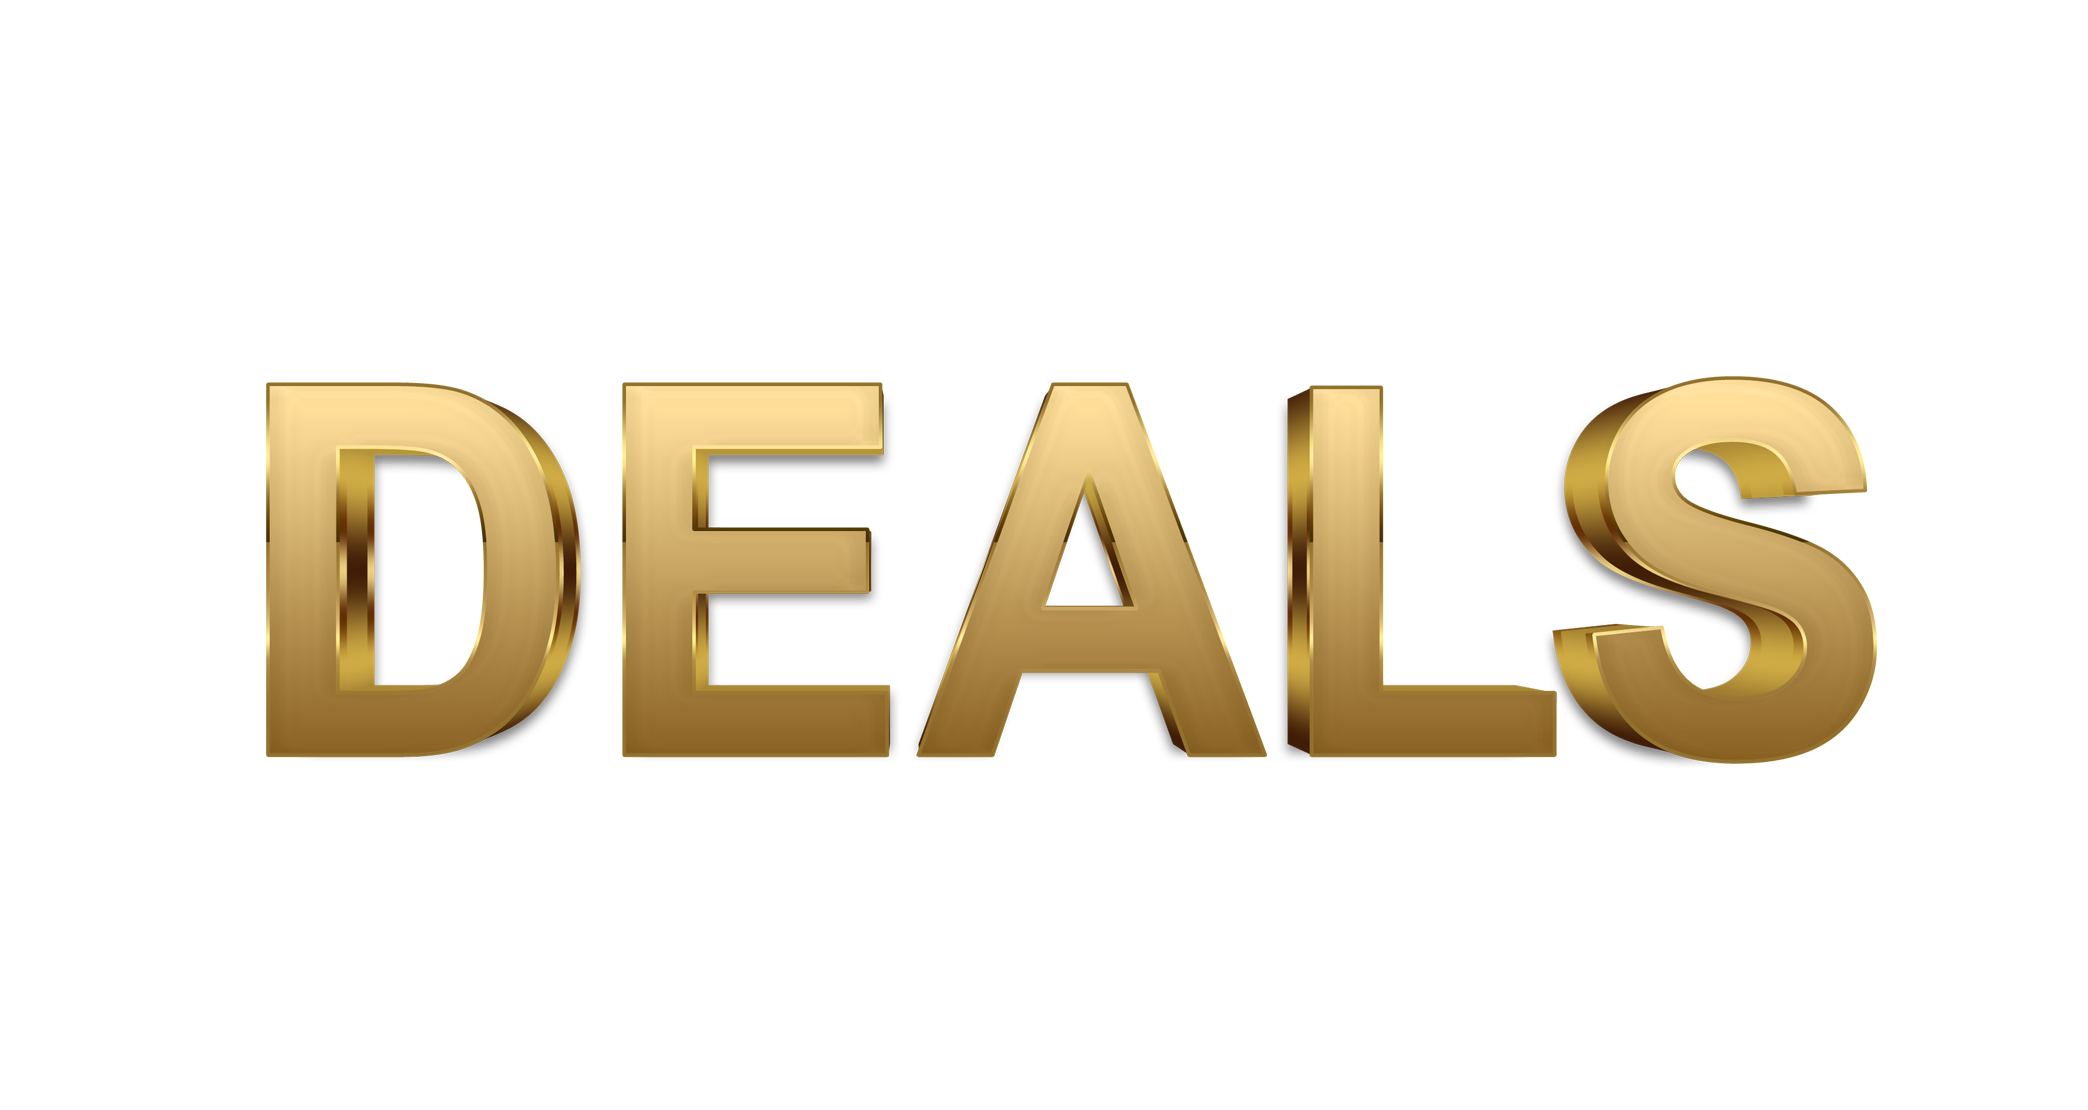 Deals word png, Deals png, word Deals gold text typography PNG images Deals png transparent background